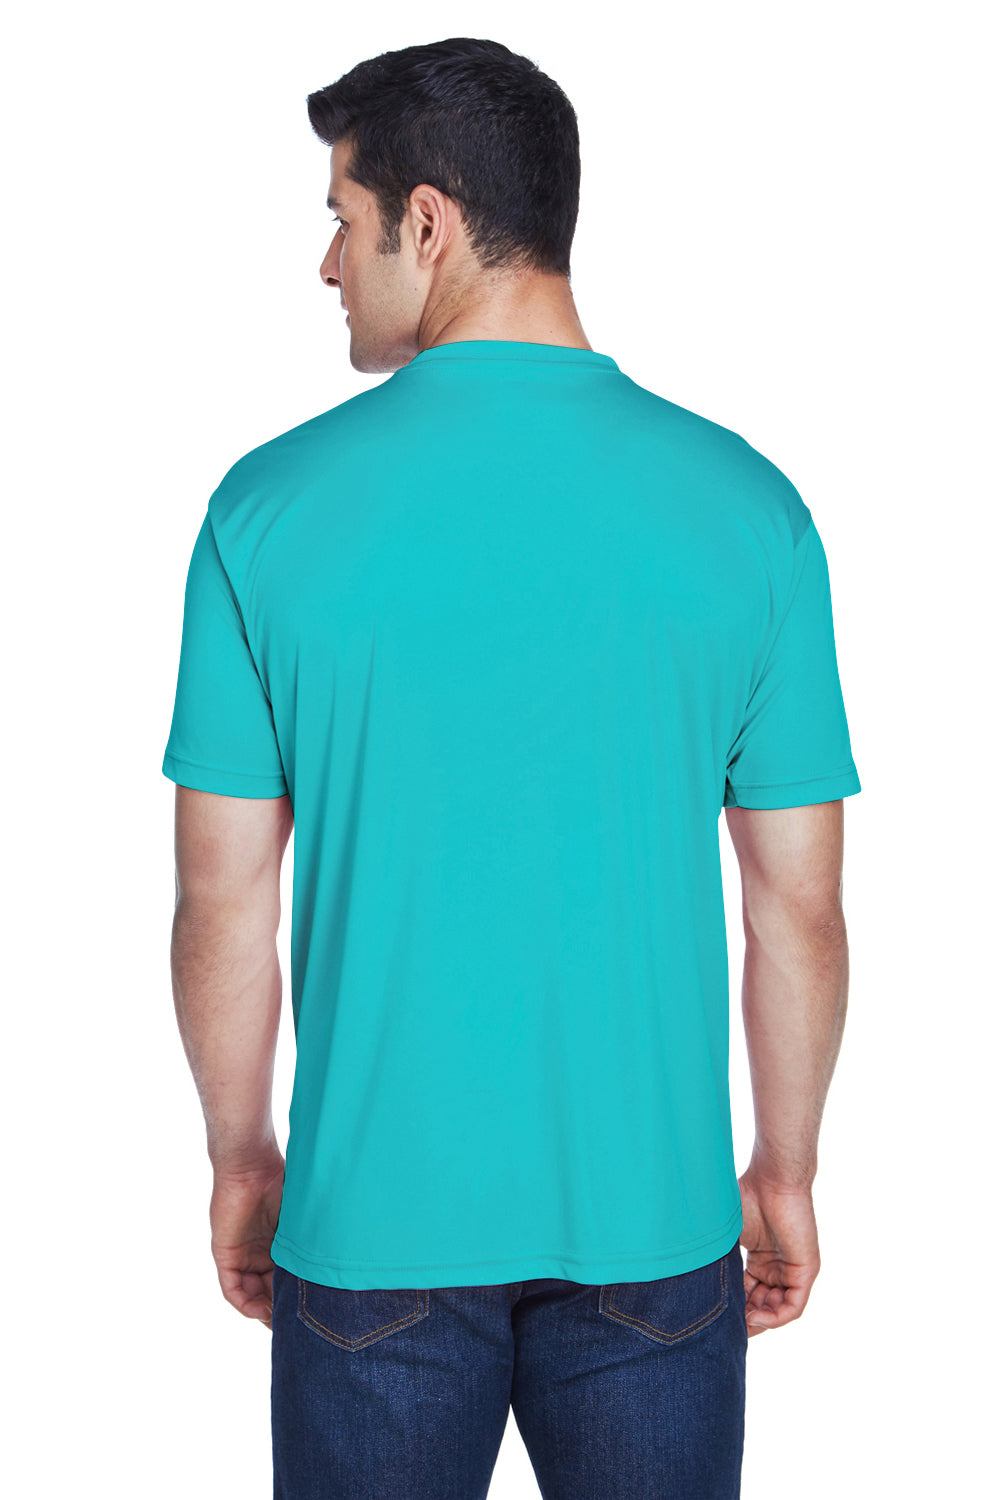 UltraClub 8420 Mens Cool & Dry Performance Moisture Wicking Short Sleeve Crewneck T-Shirt Jade Green Back